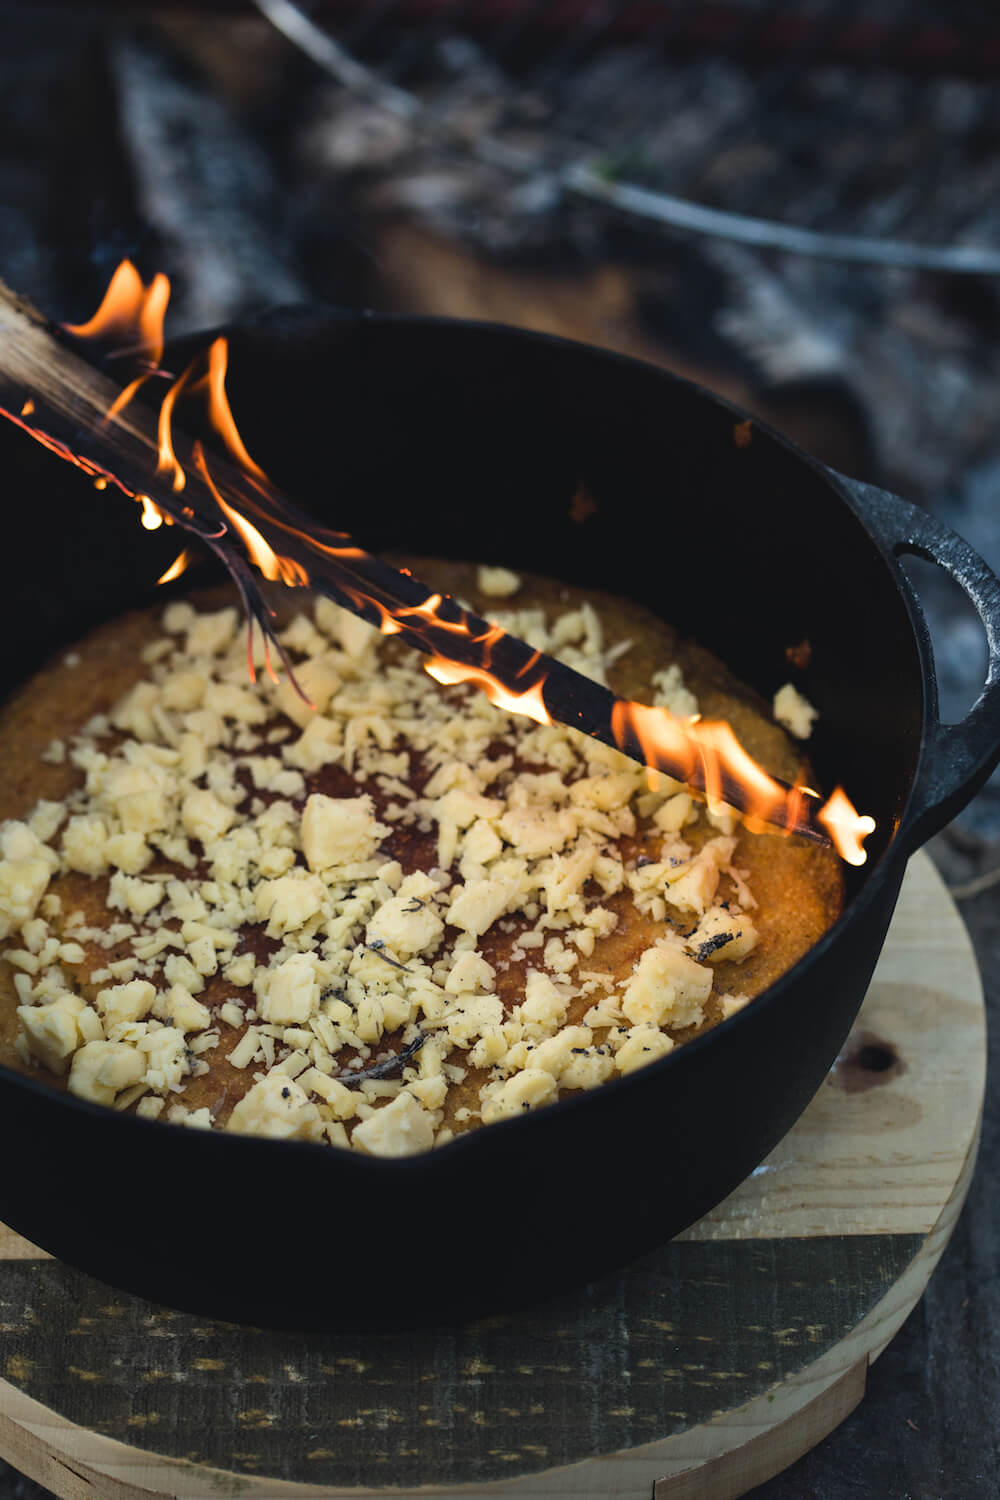 alt="Crock-perfected gluten-free cheddar cornbread with cranberry-orange and maple jam by Emma Frisch using Barebones Living cast iron crock pot"